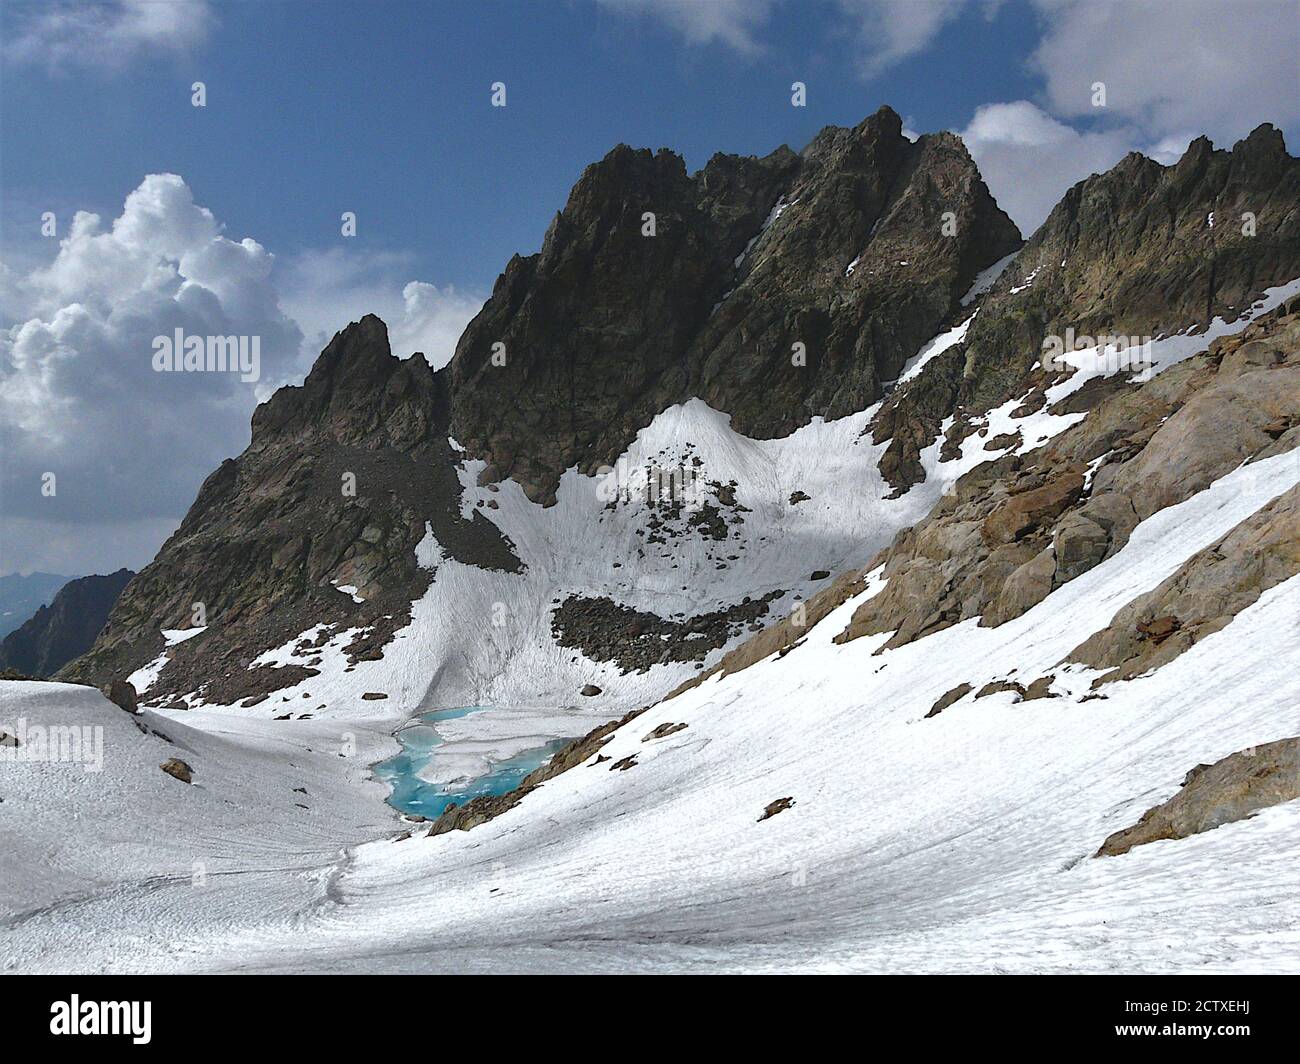 Scenic view of Mountains against sky and clouds,Cima di Nasta, Alpi Marittime, Italian Alps Stock Photo